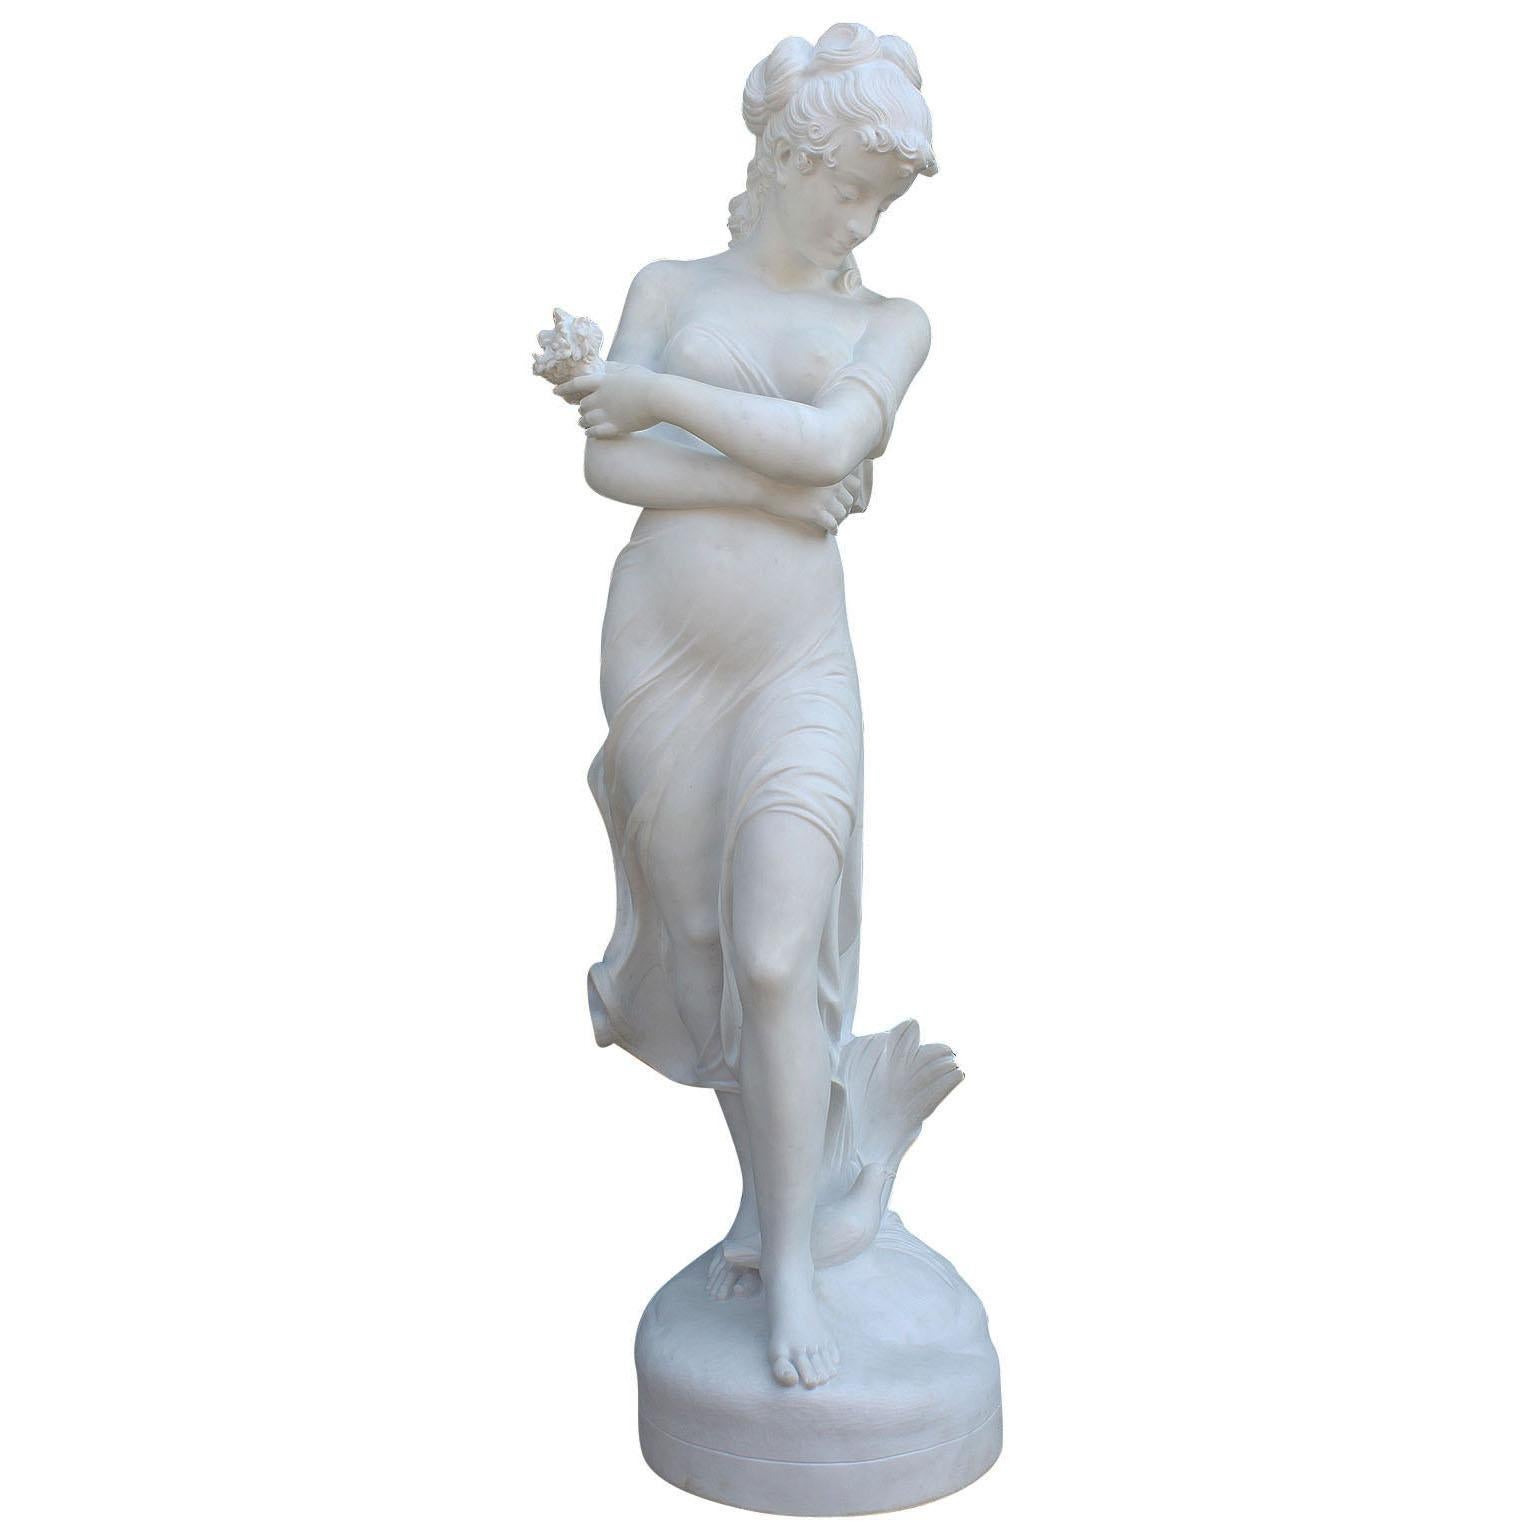 Lifesize Italian 20th Century Carved Carrara Marble Figure of a Semi-Nude Girl